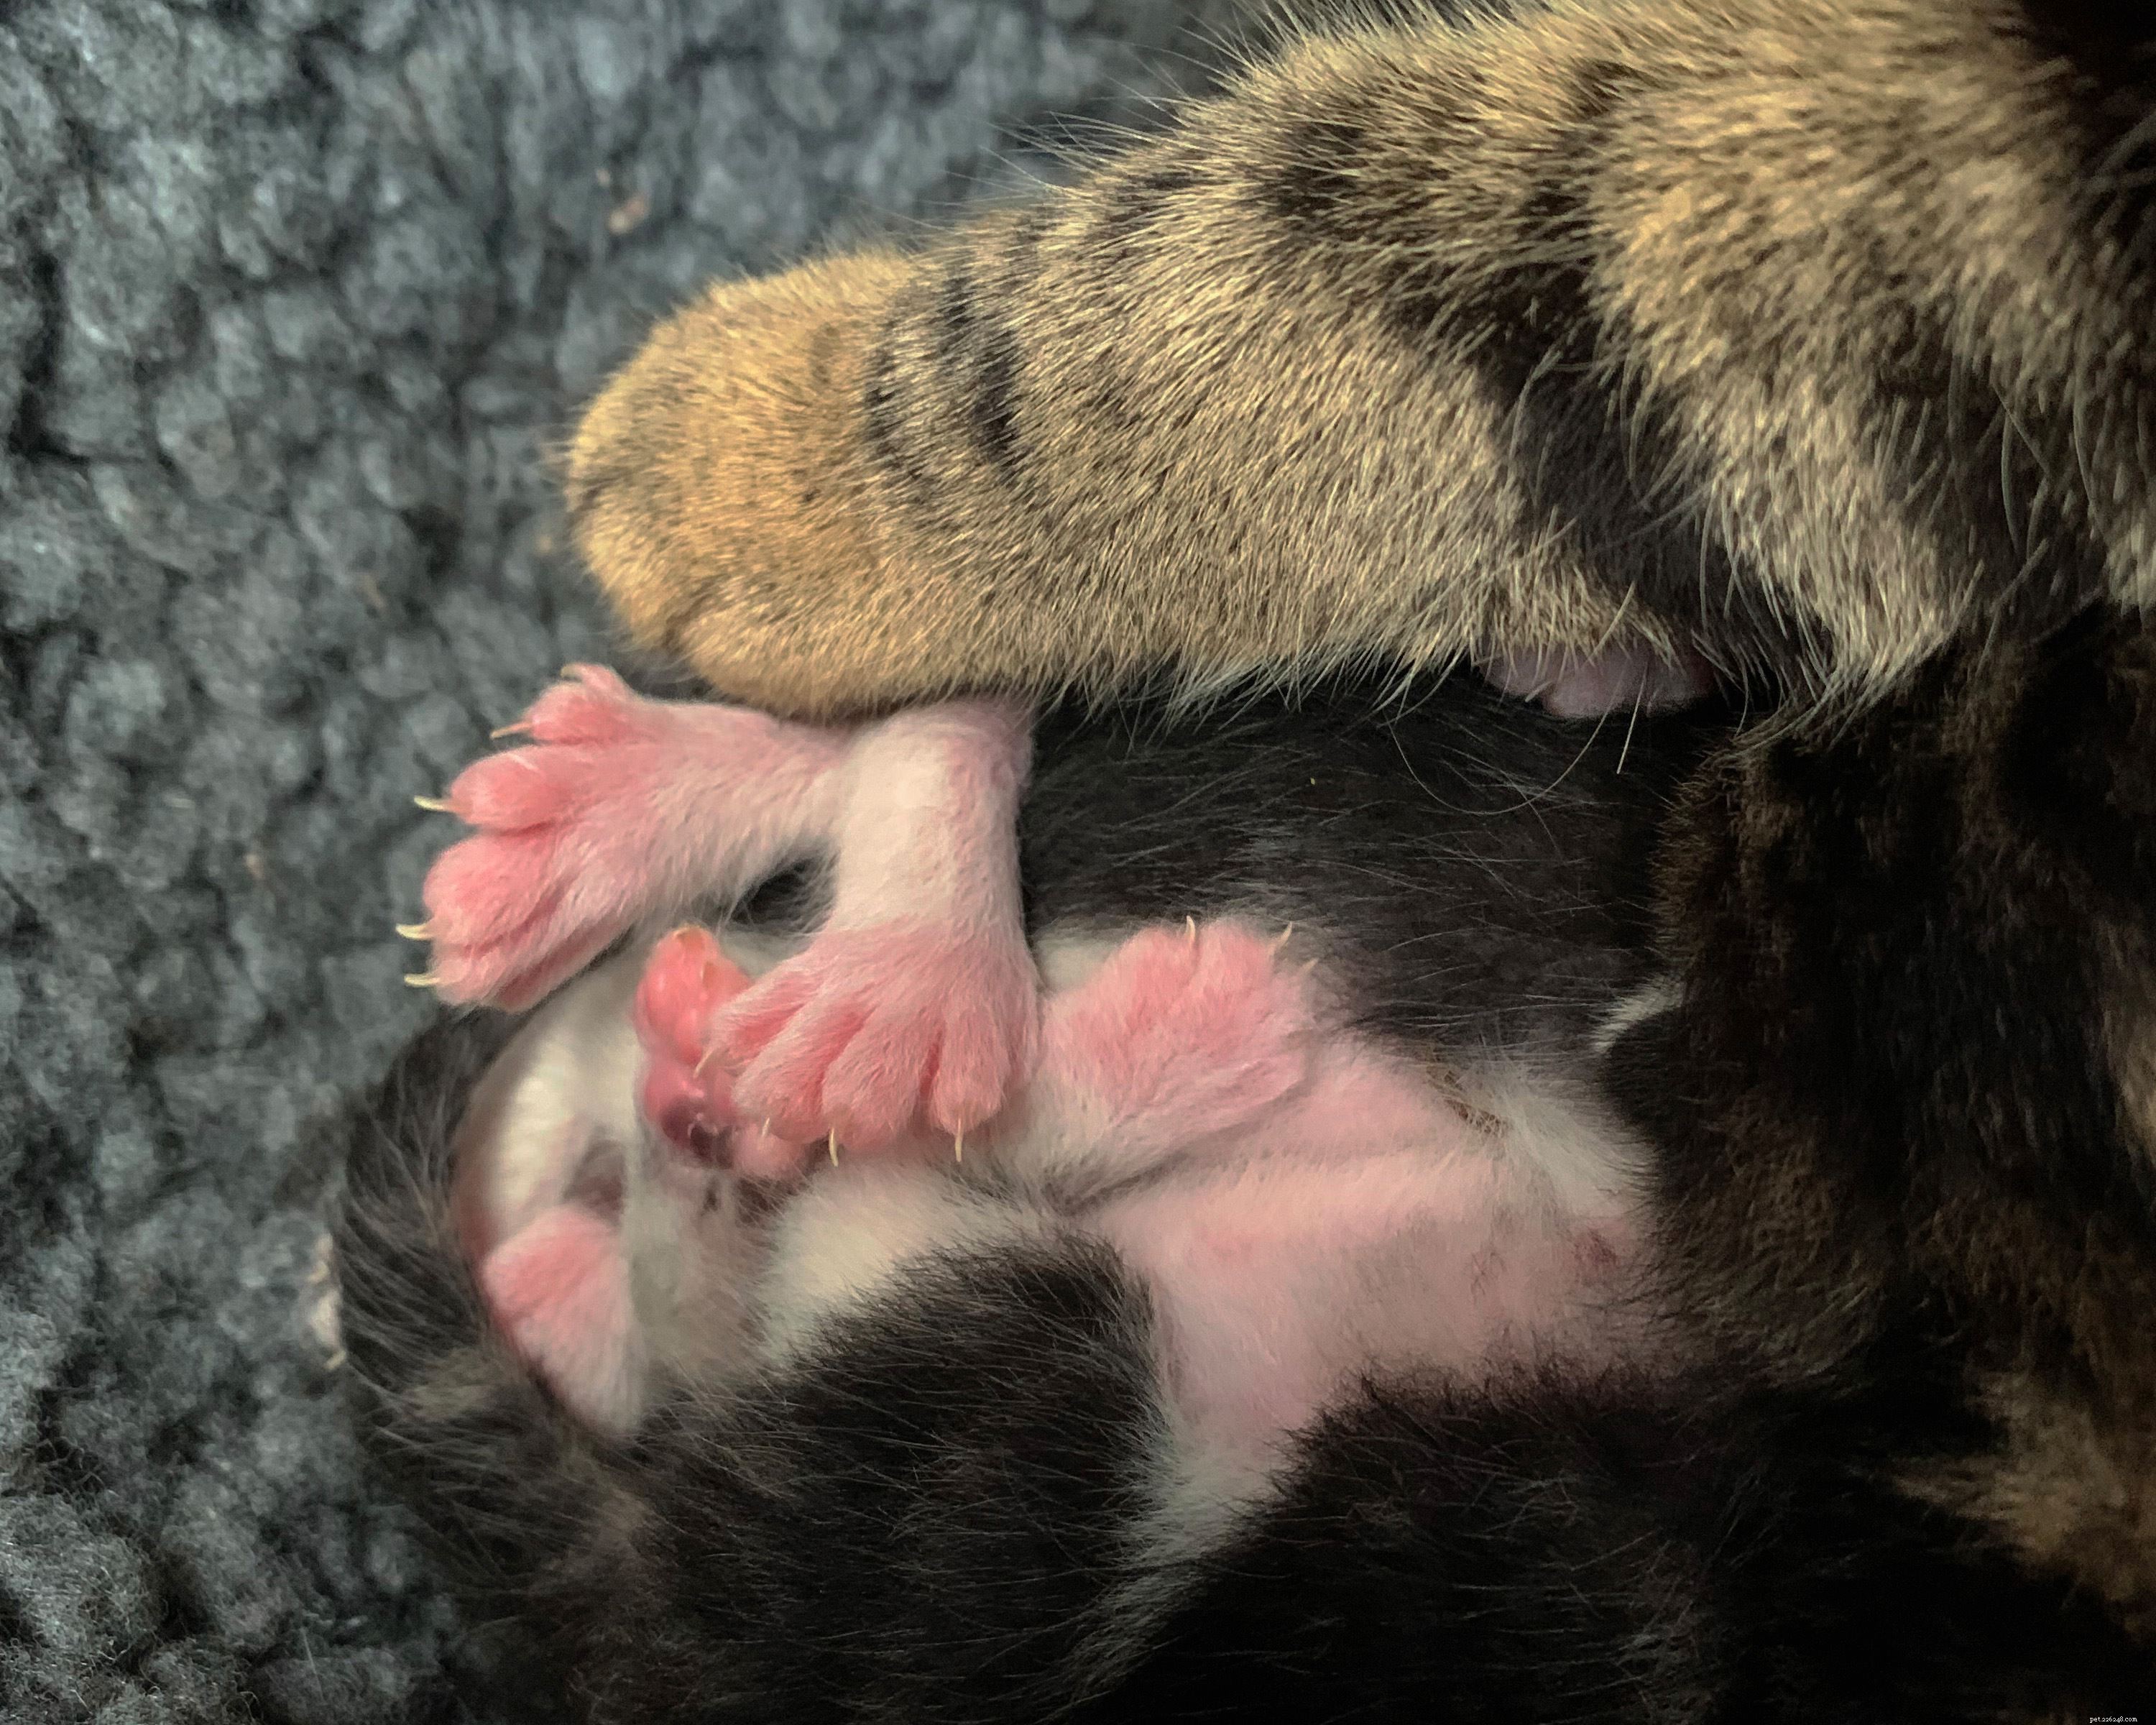 Gosport의 새끼 고양이 3마리가 초대형 다지증 발을 가지고 태어났습니다.